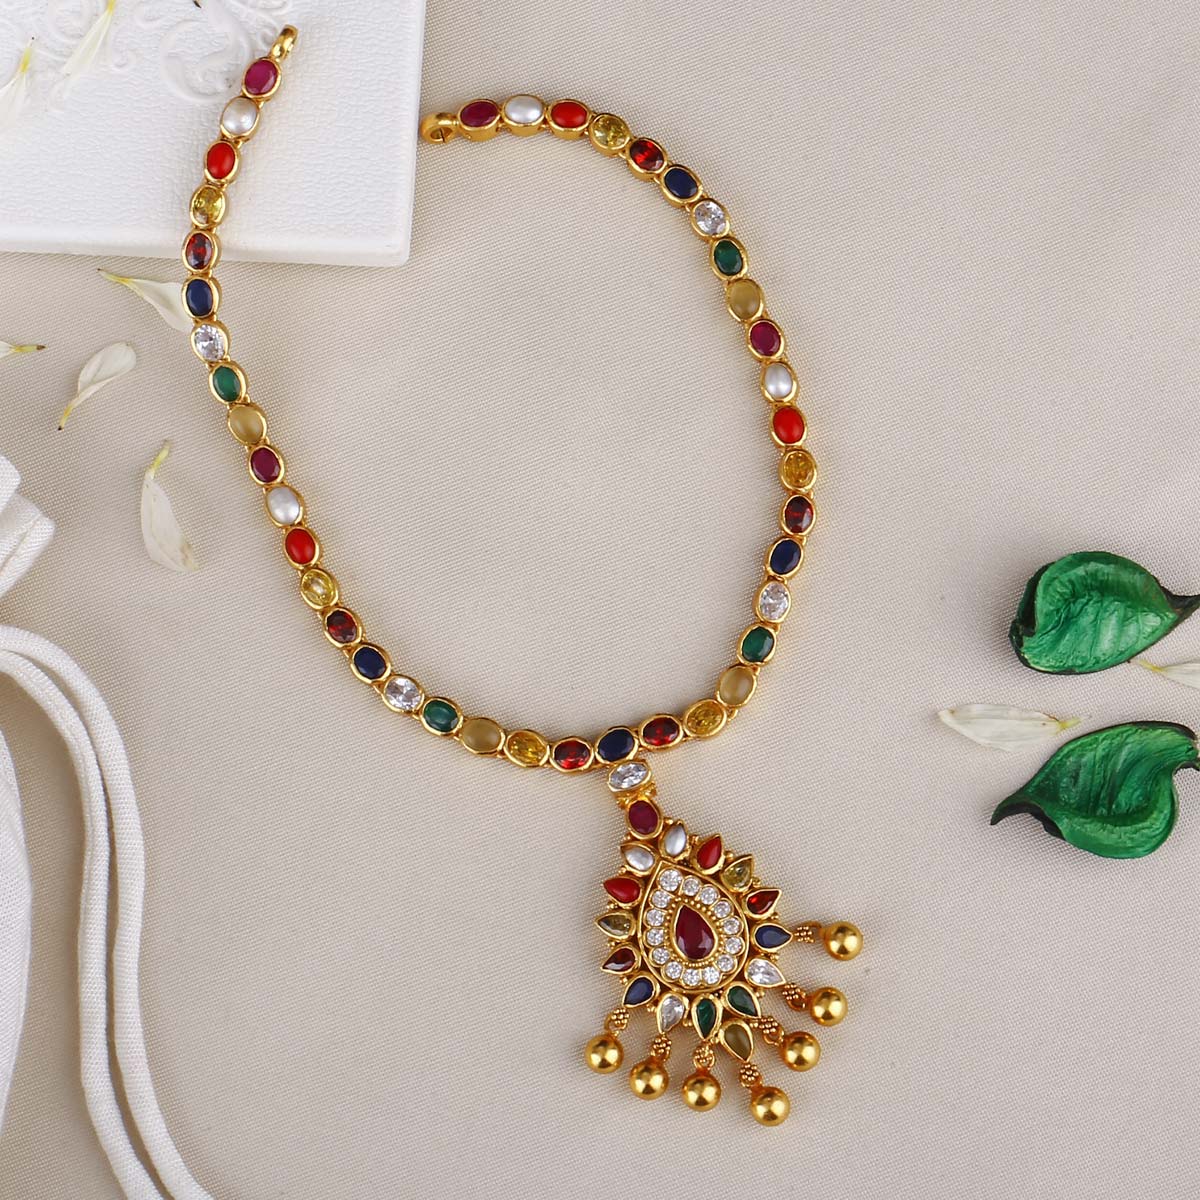 Navarathna Necklace | Bridal necklace designs, Jewelry design, Gold jewelry  fashion